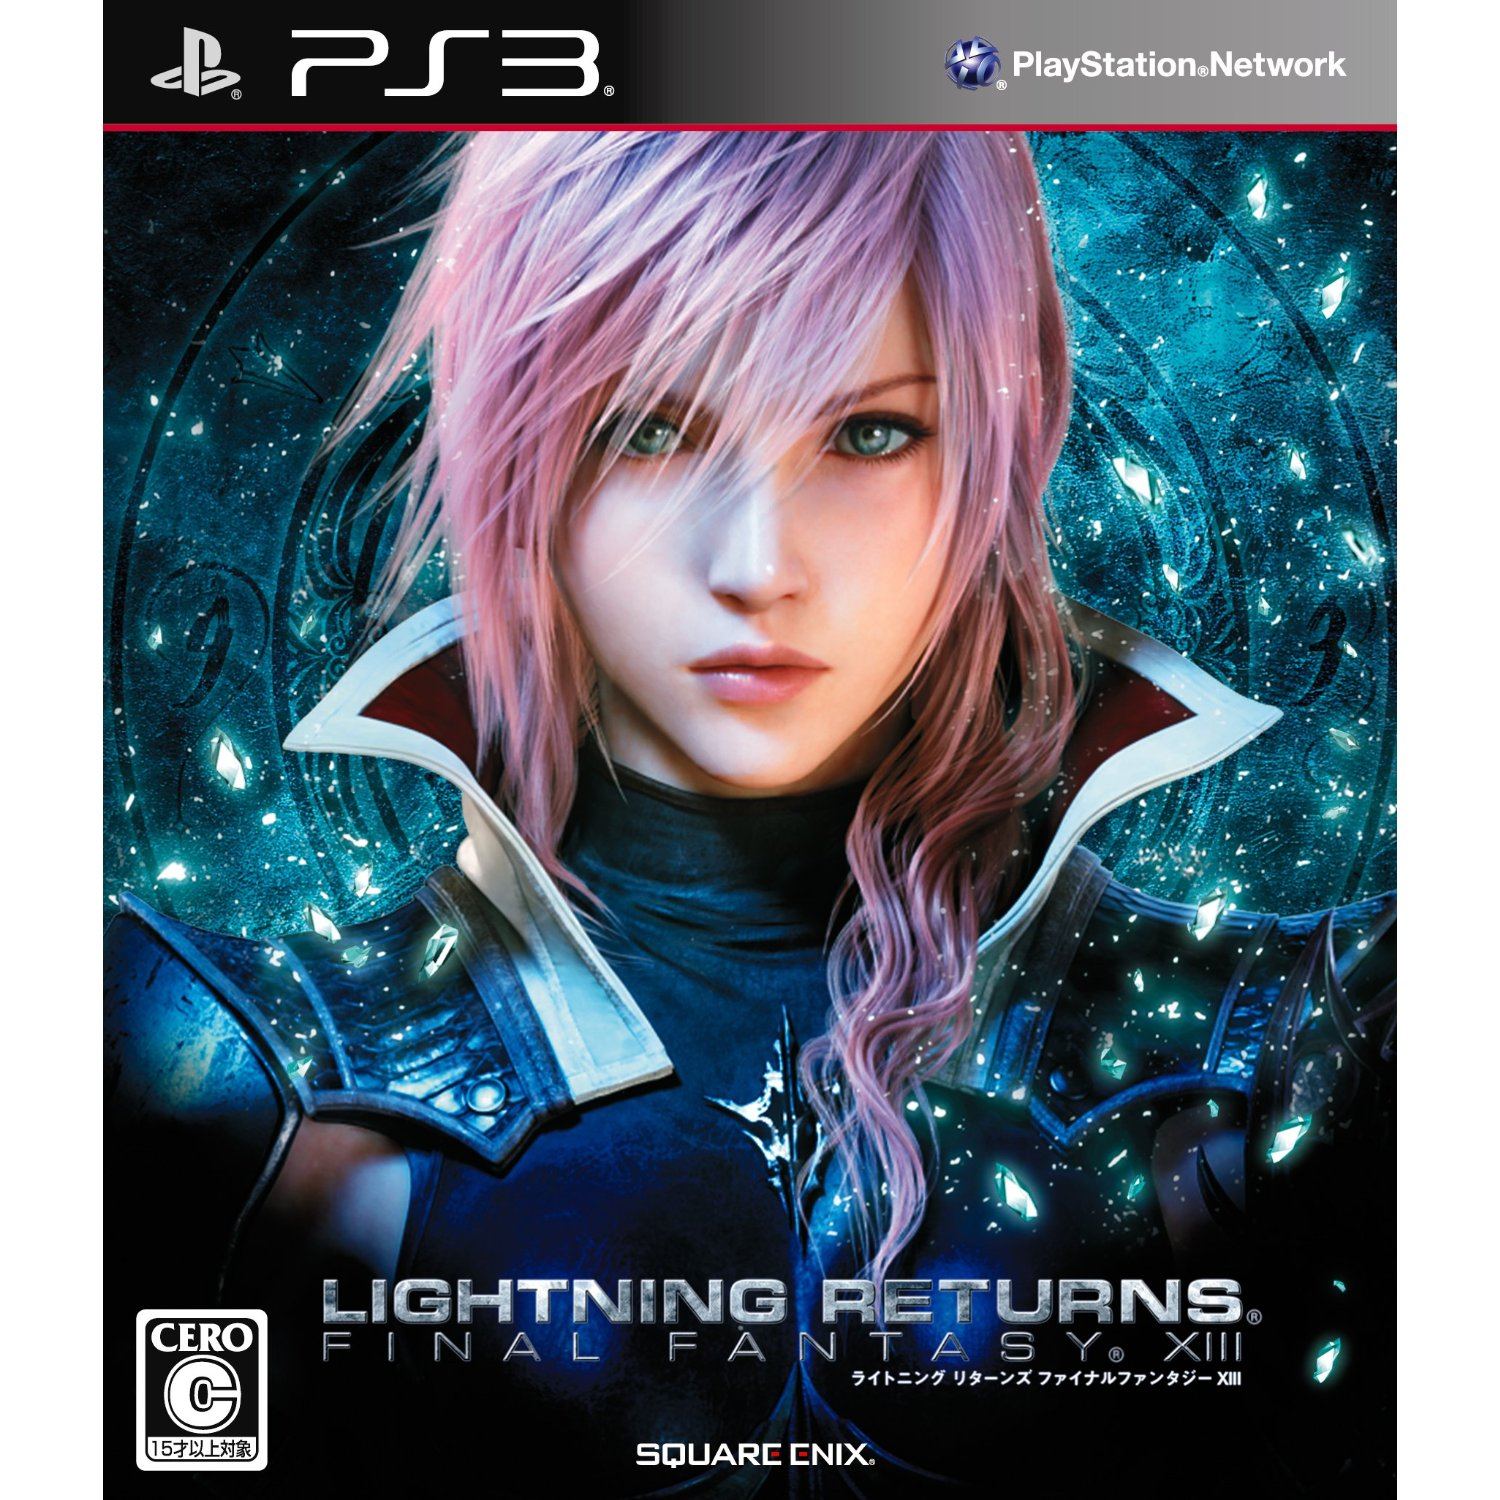 download free lightning returns ™ final fantasy xiii